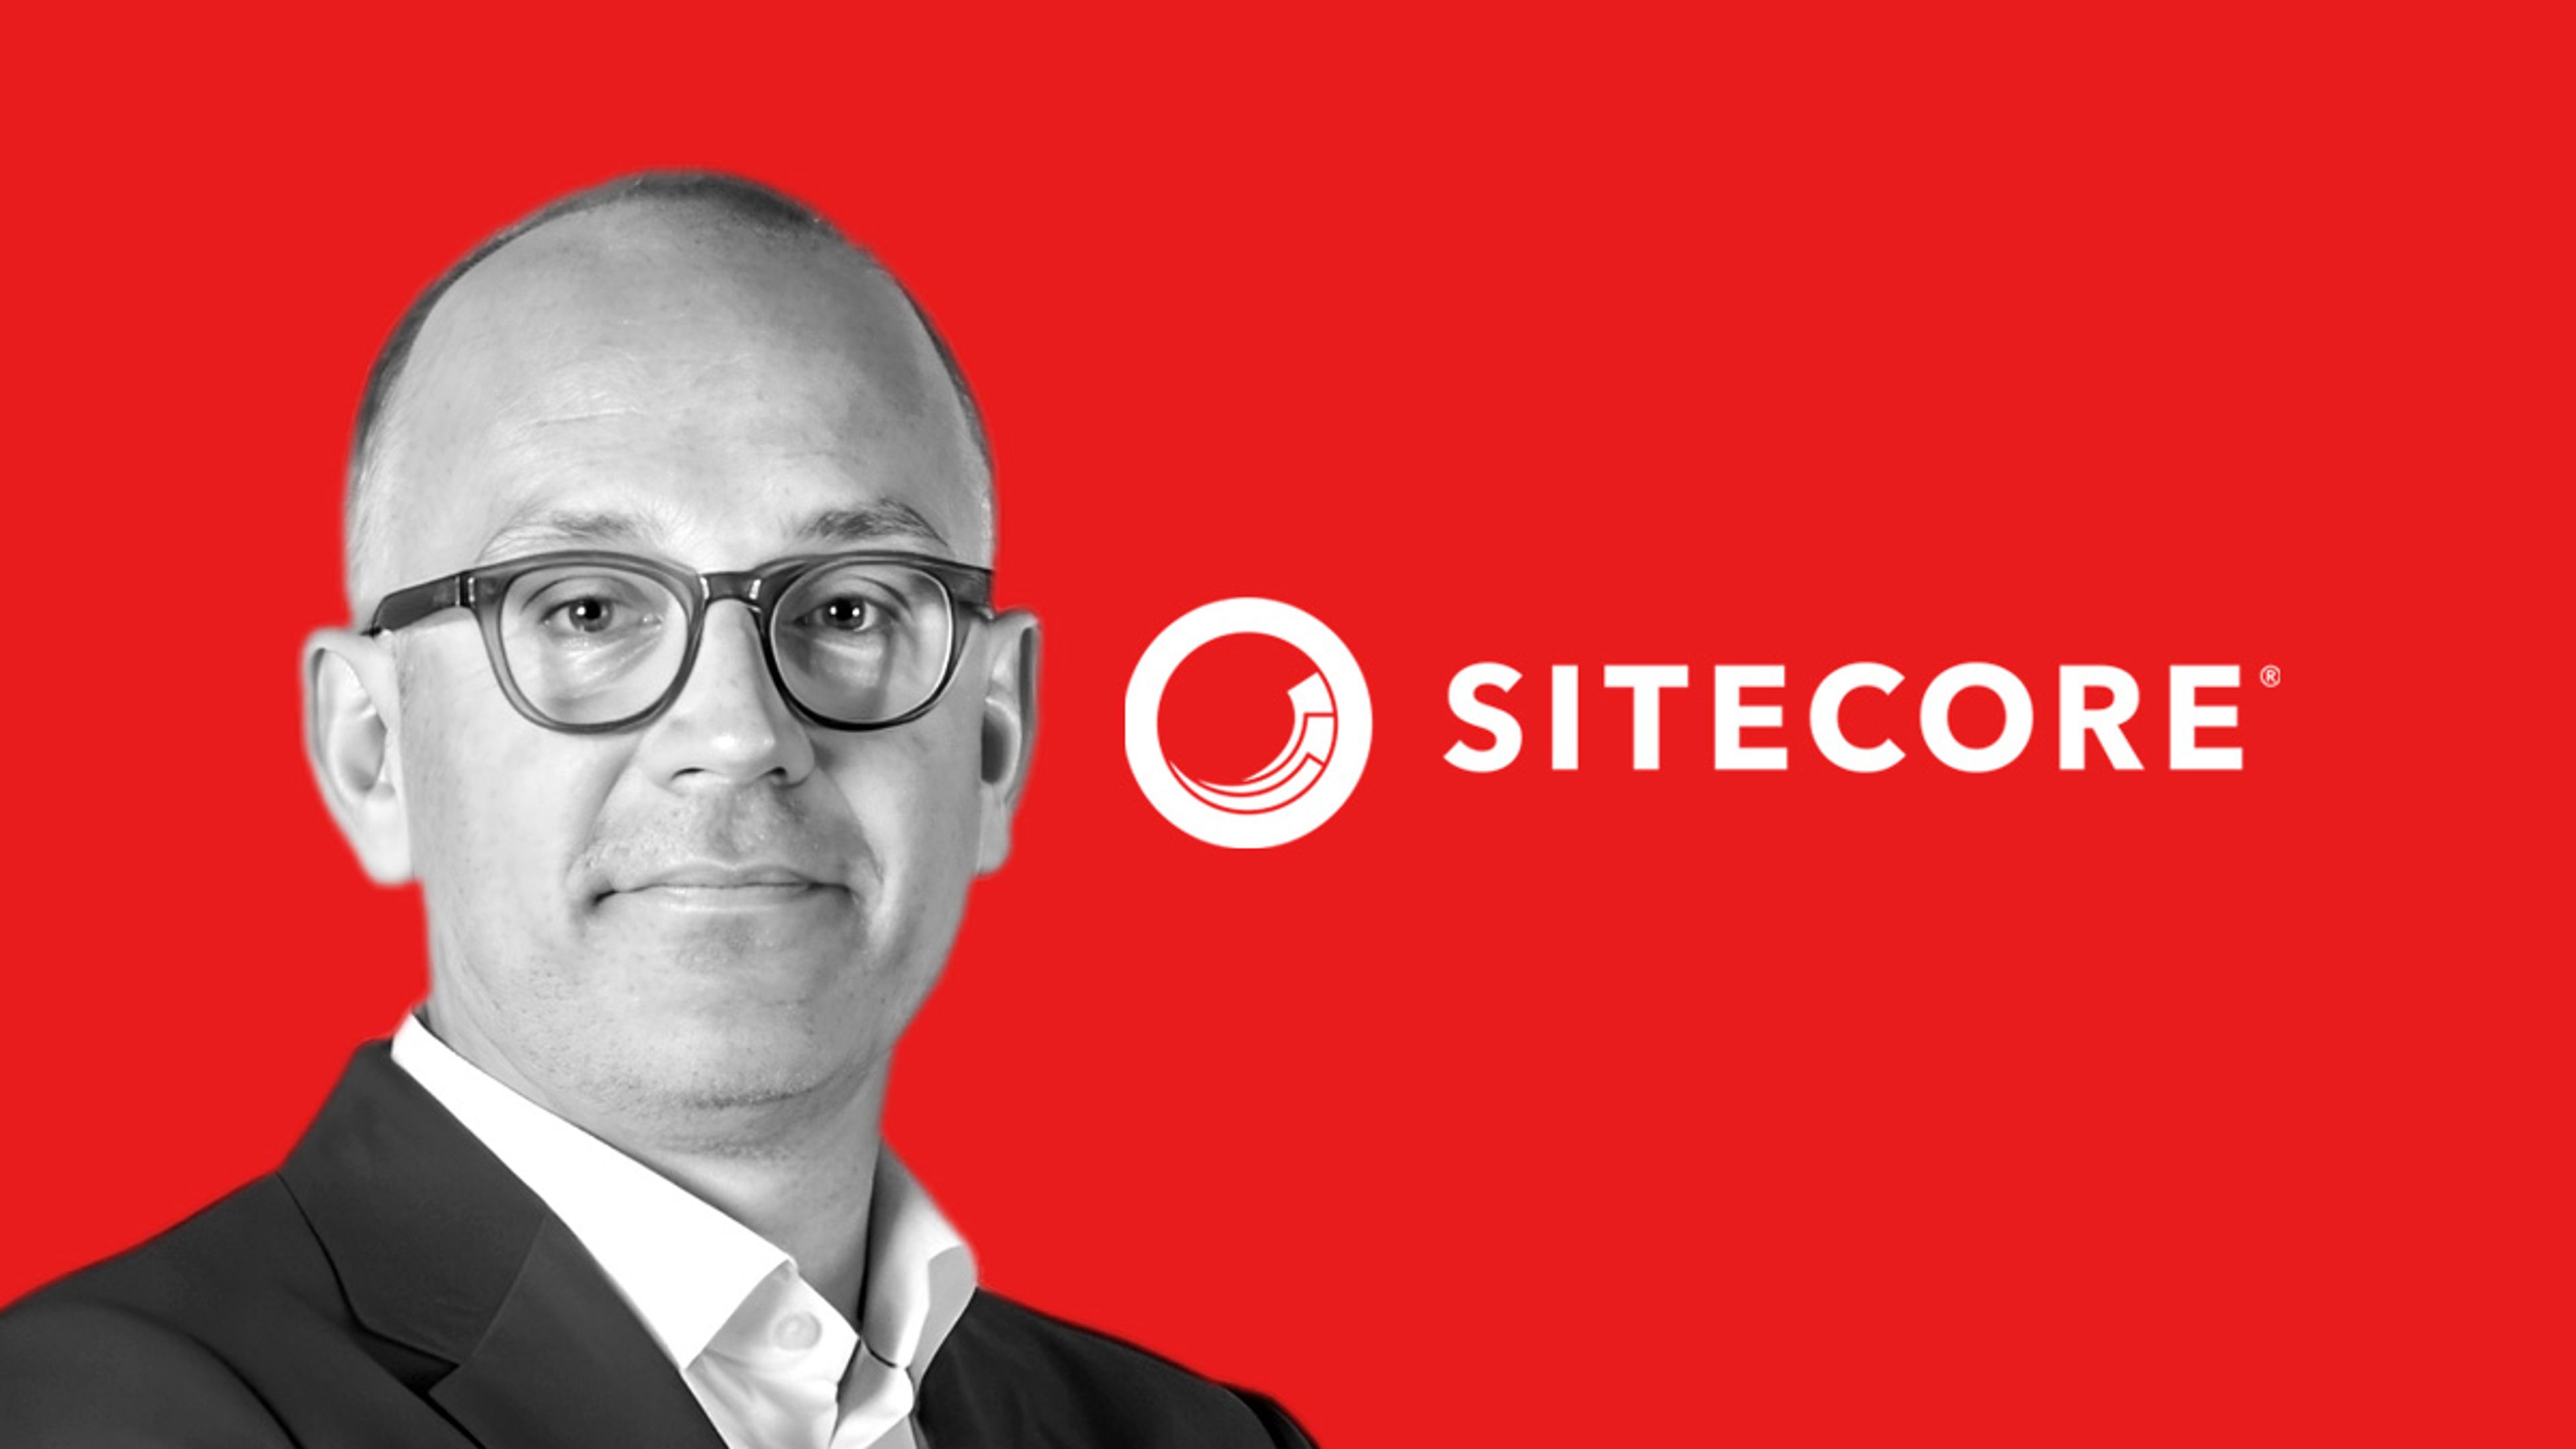 Dan O'Flanagan headshot with Sitecore logo